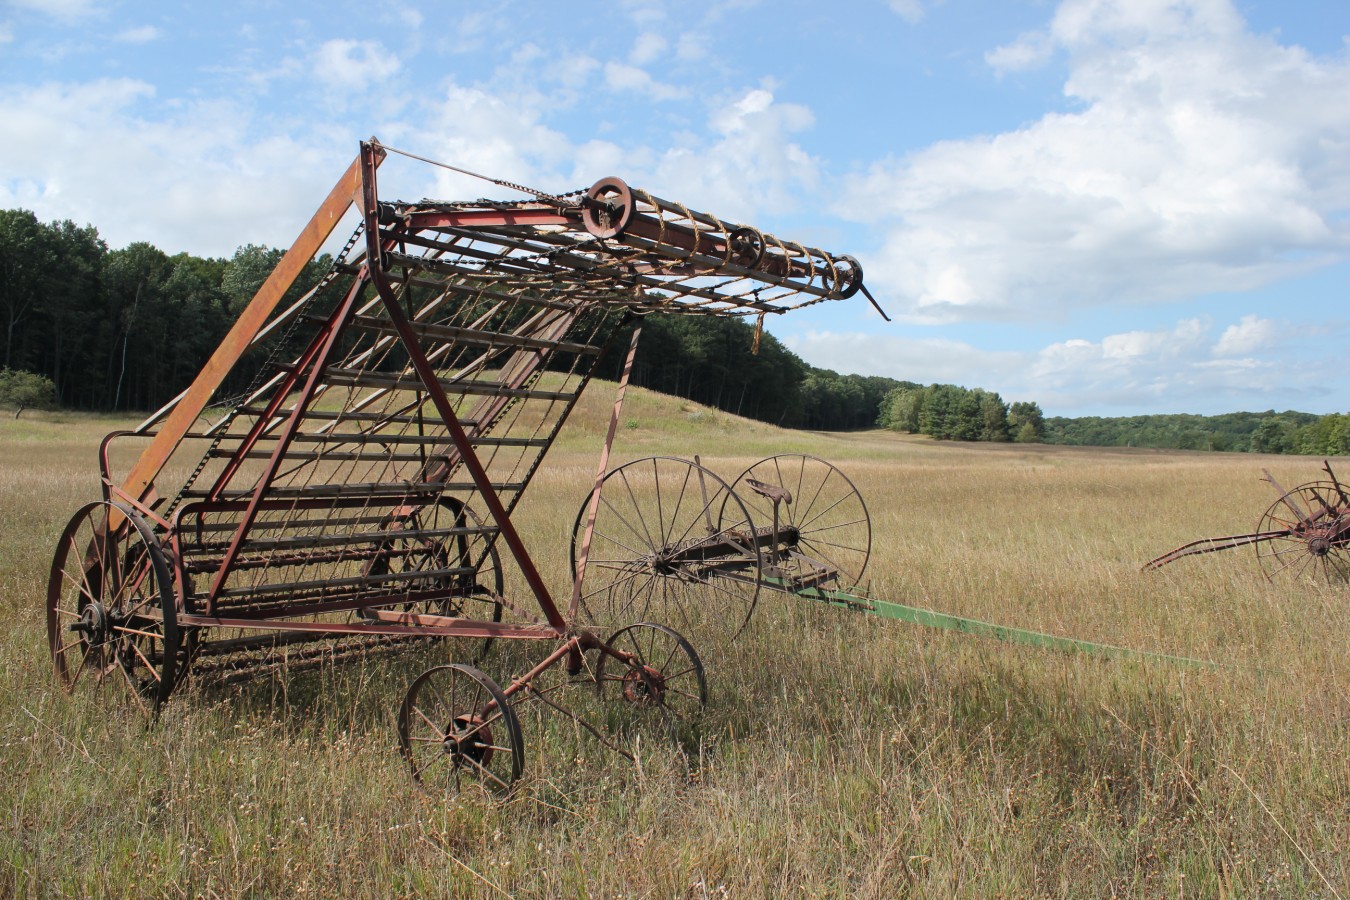 antique farm equipment in field